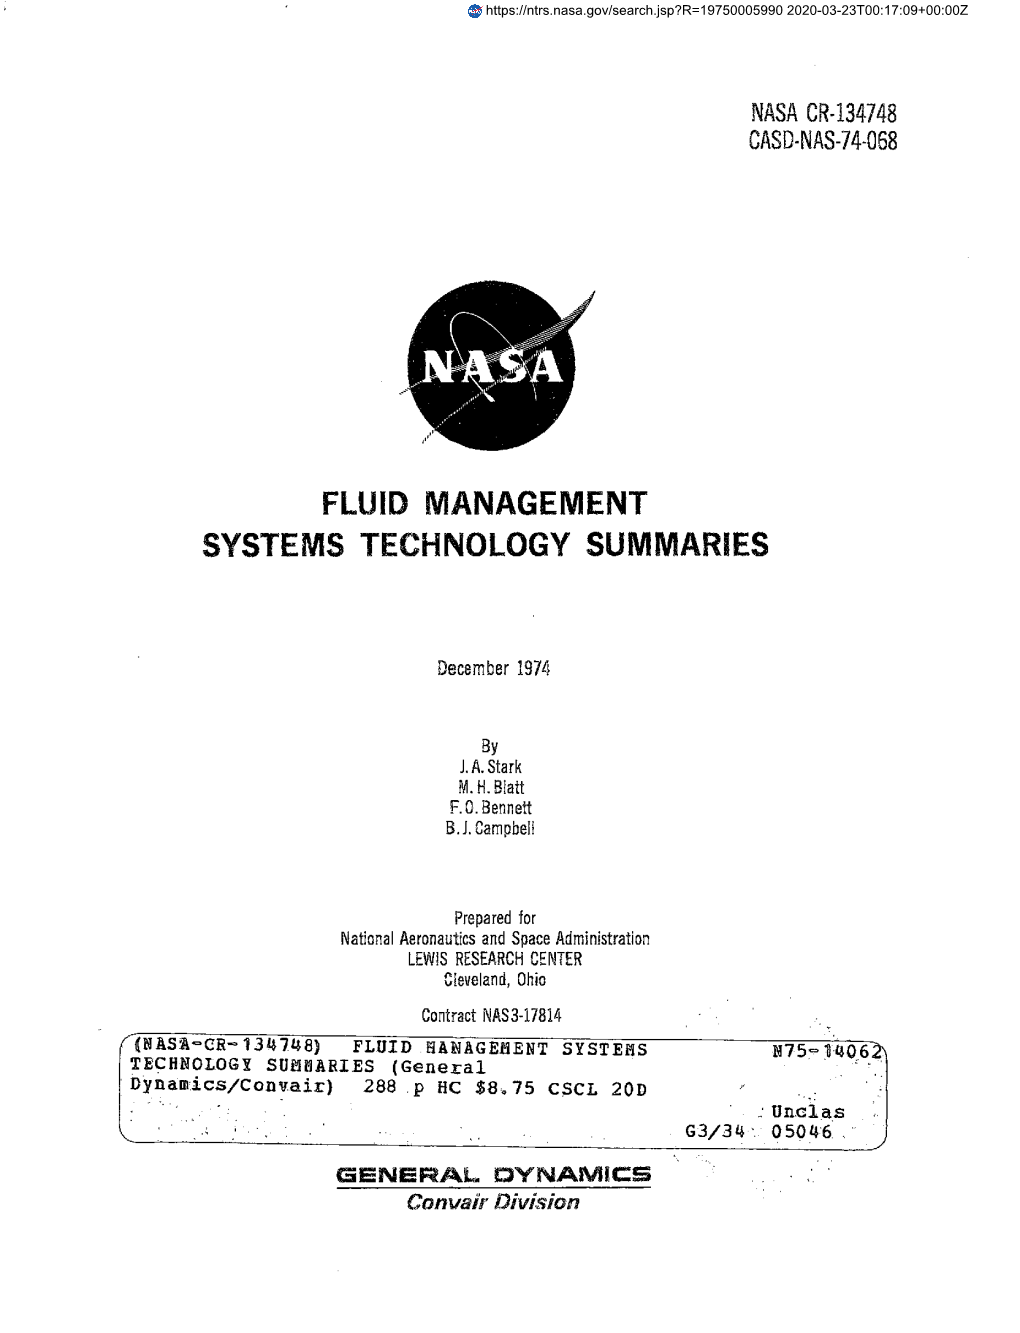 Fluid Management Systems Technology Summaries